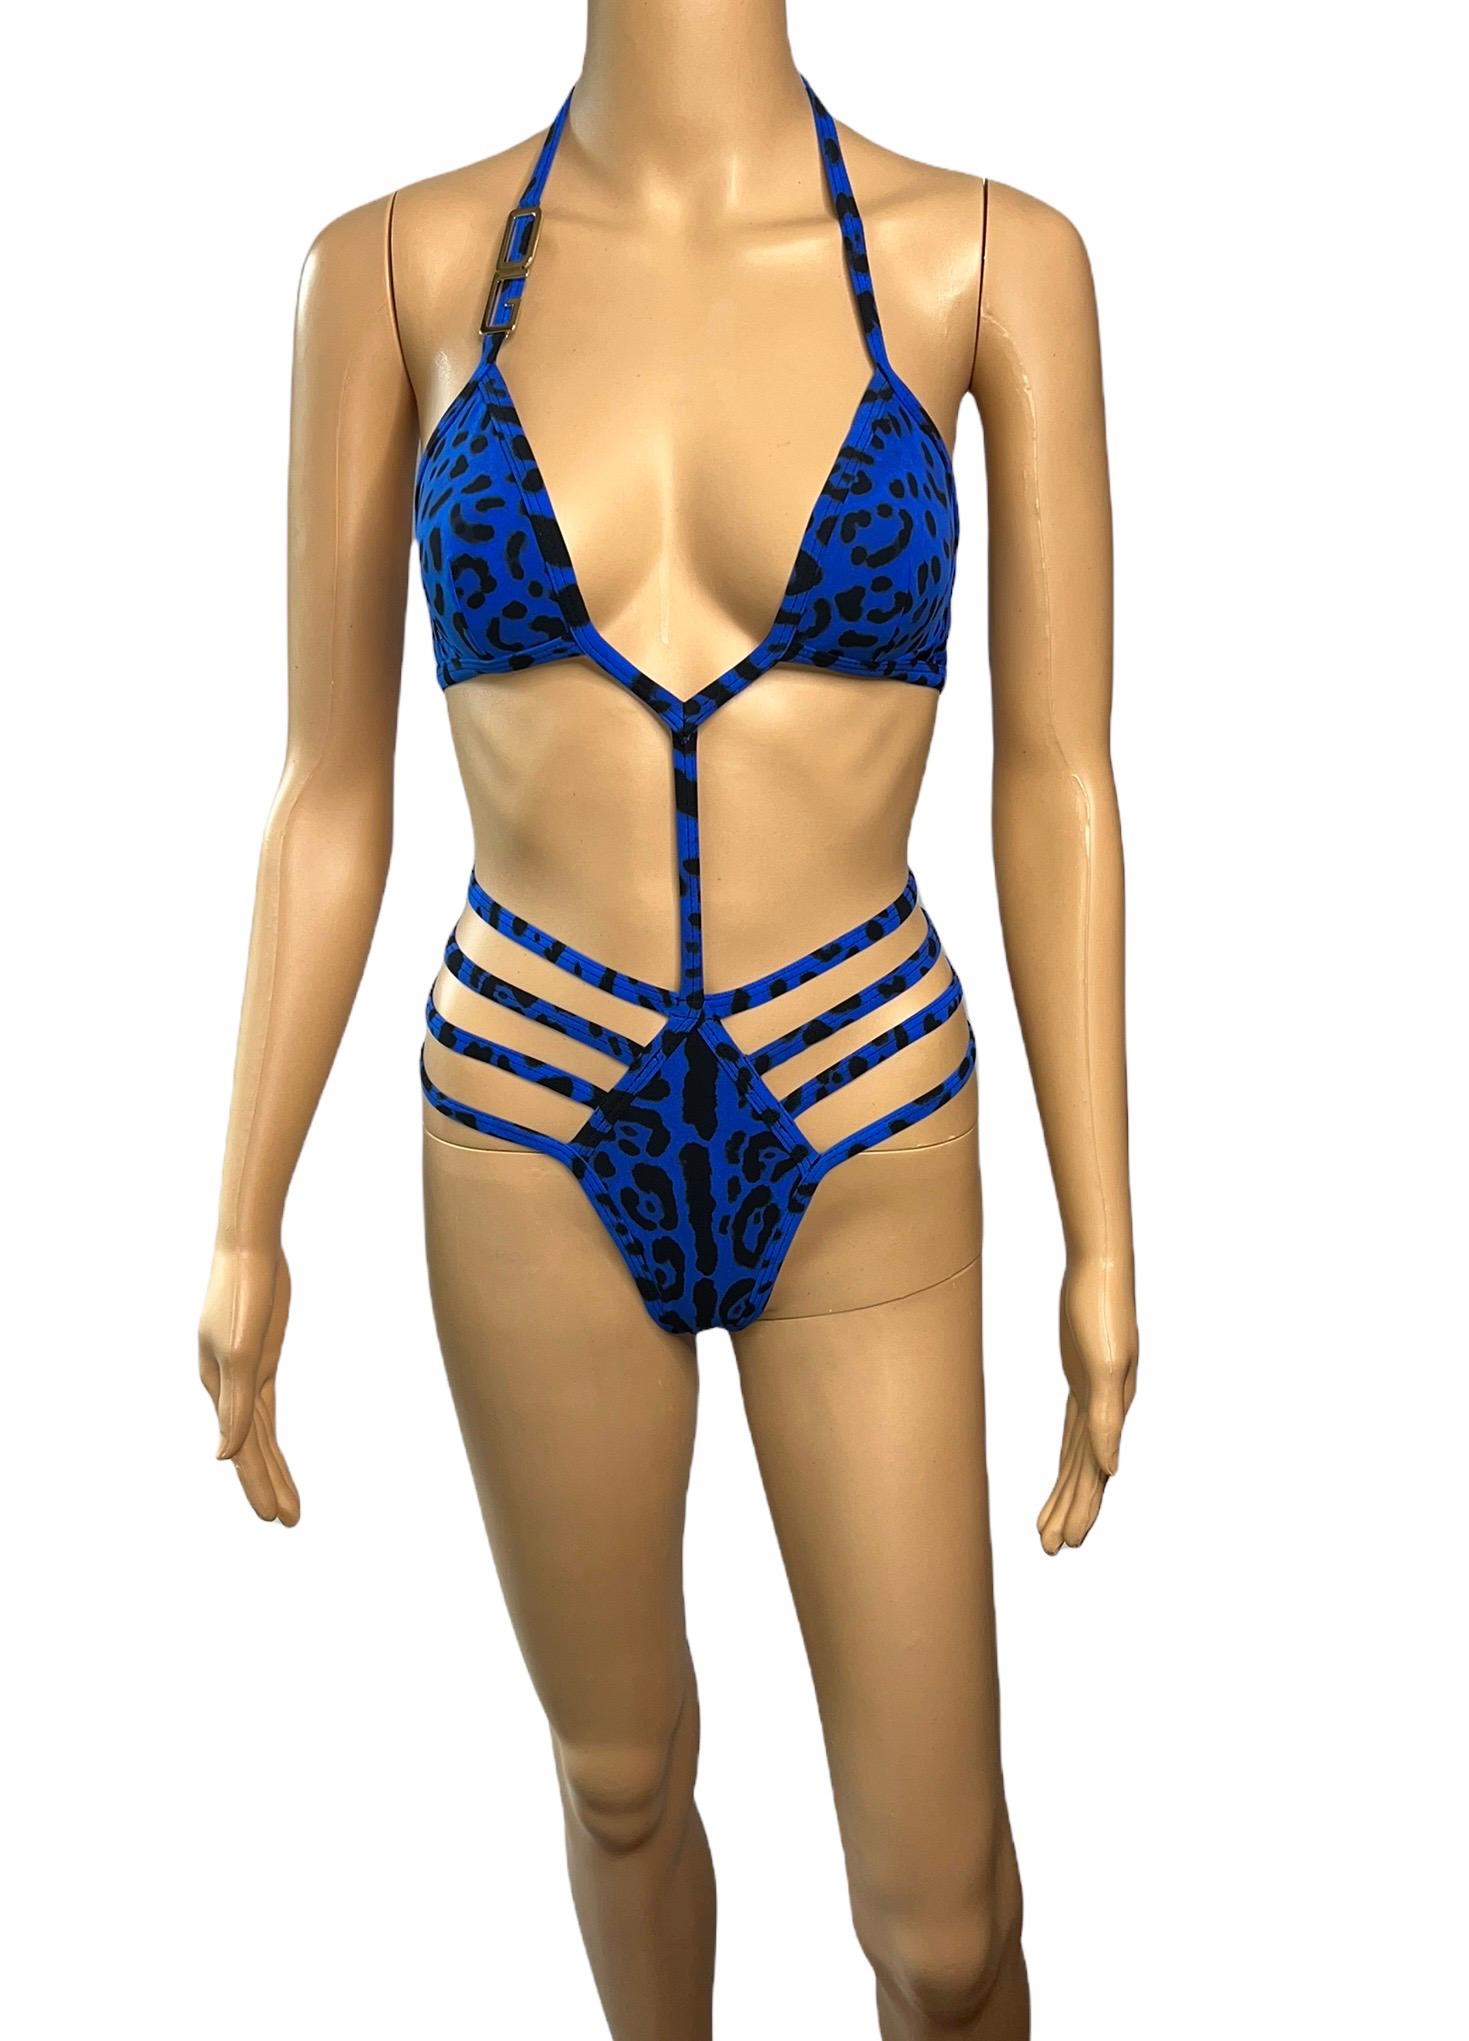 Dolce & Gabbana Unworn Logo Cutout Strappy Bodysuit Monokini Swimsuit Swimwear

Size 2

Condition: New with Tags
